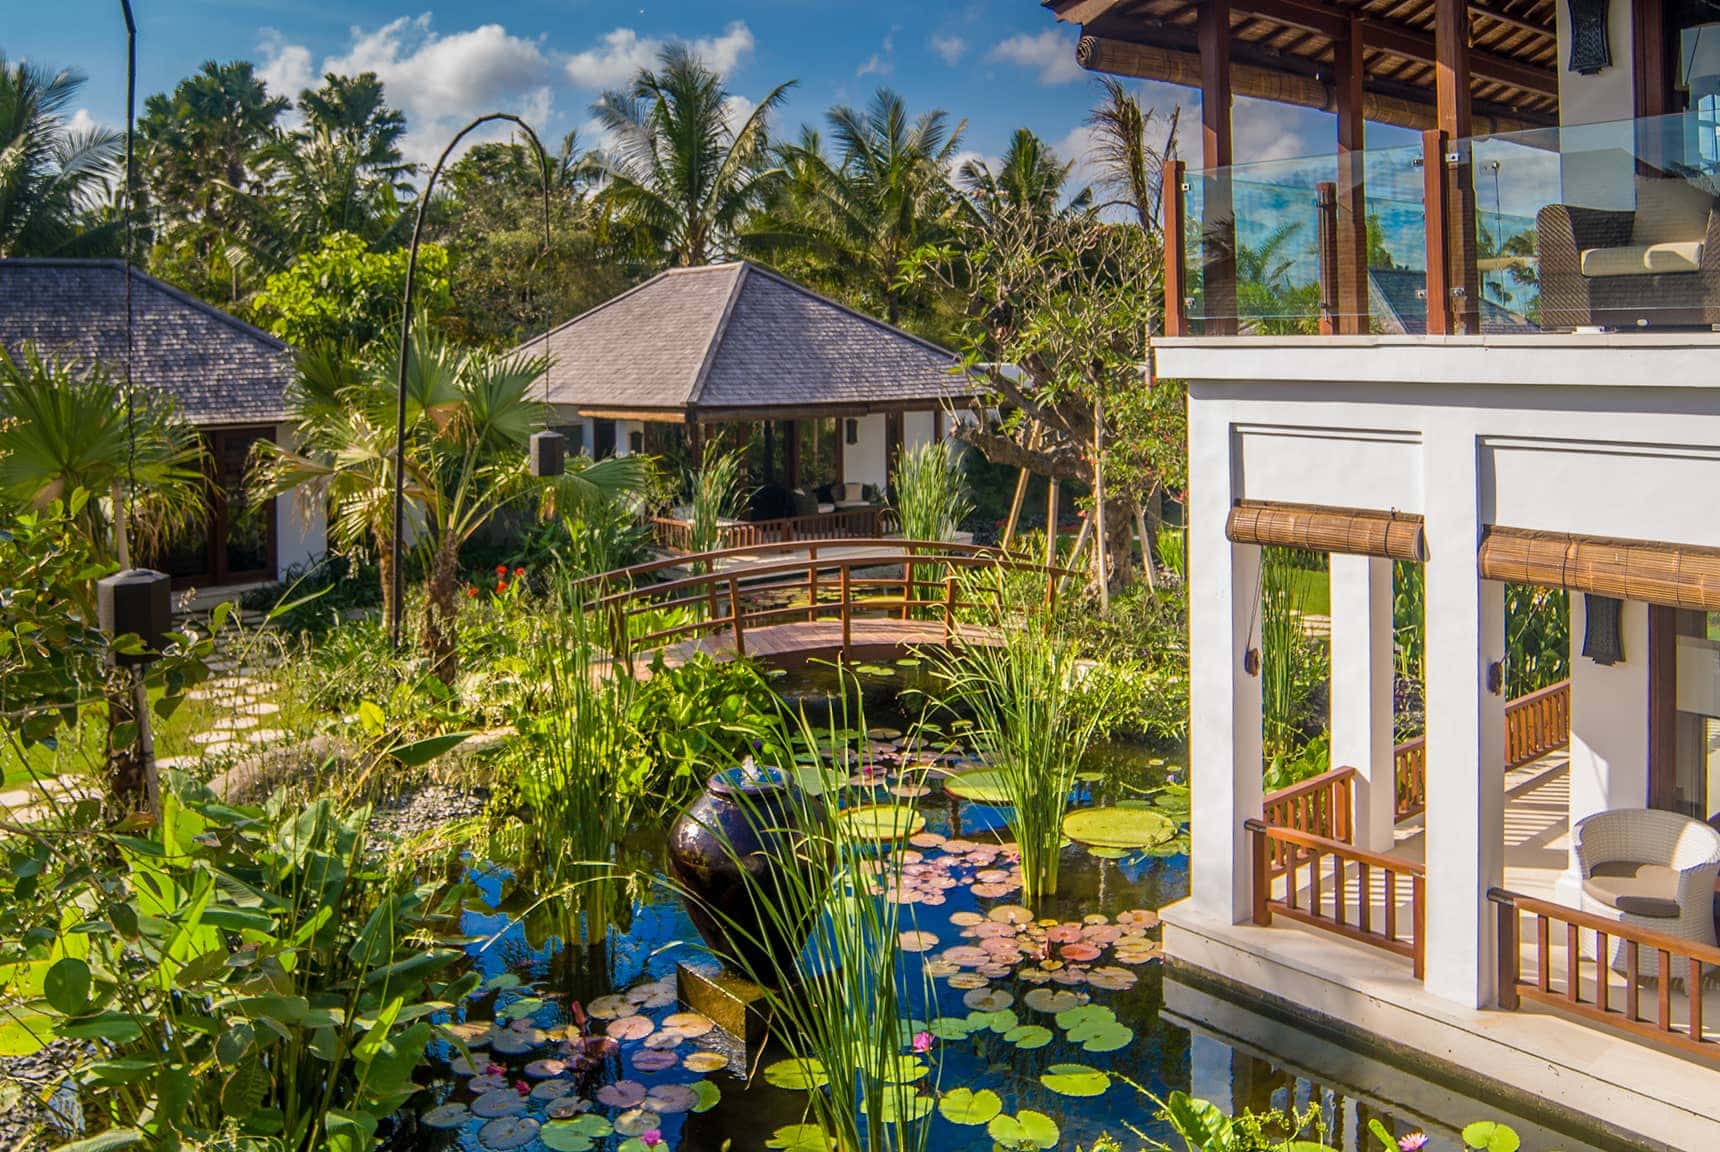 Jagaditha - Cemagi, Bali Indonesia (Bali villa photography by master photographer Rick Carmichael of LuxViz)